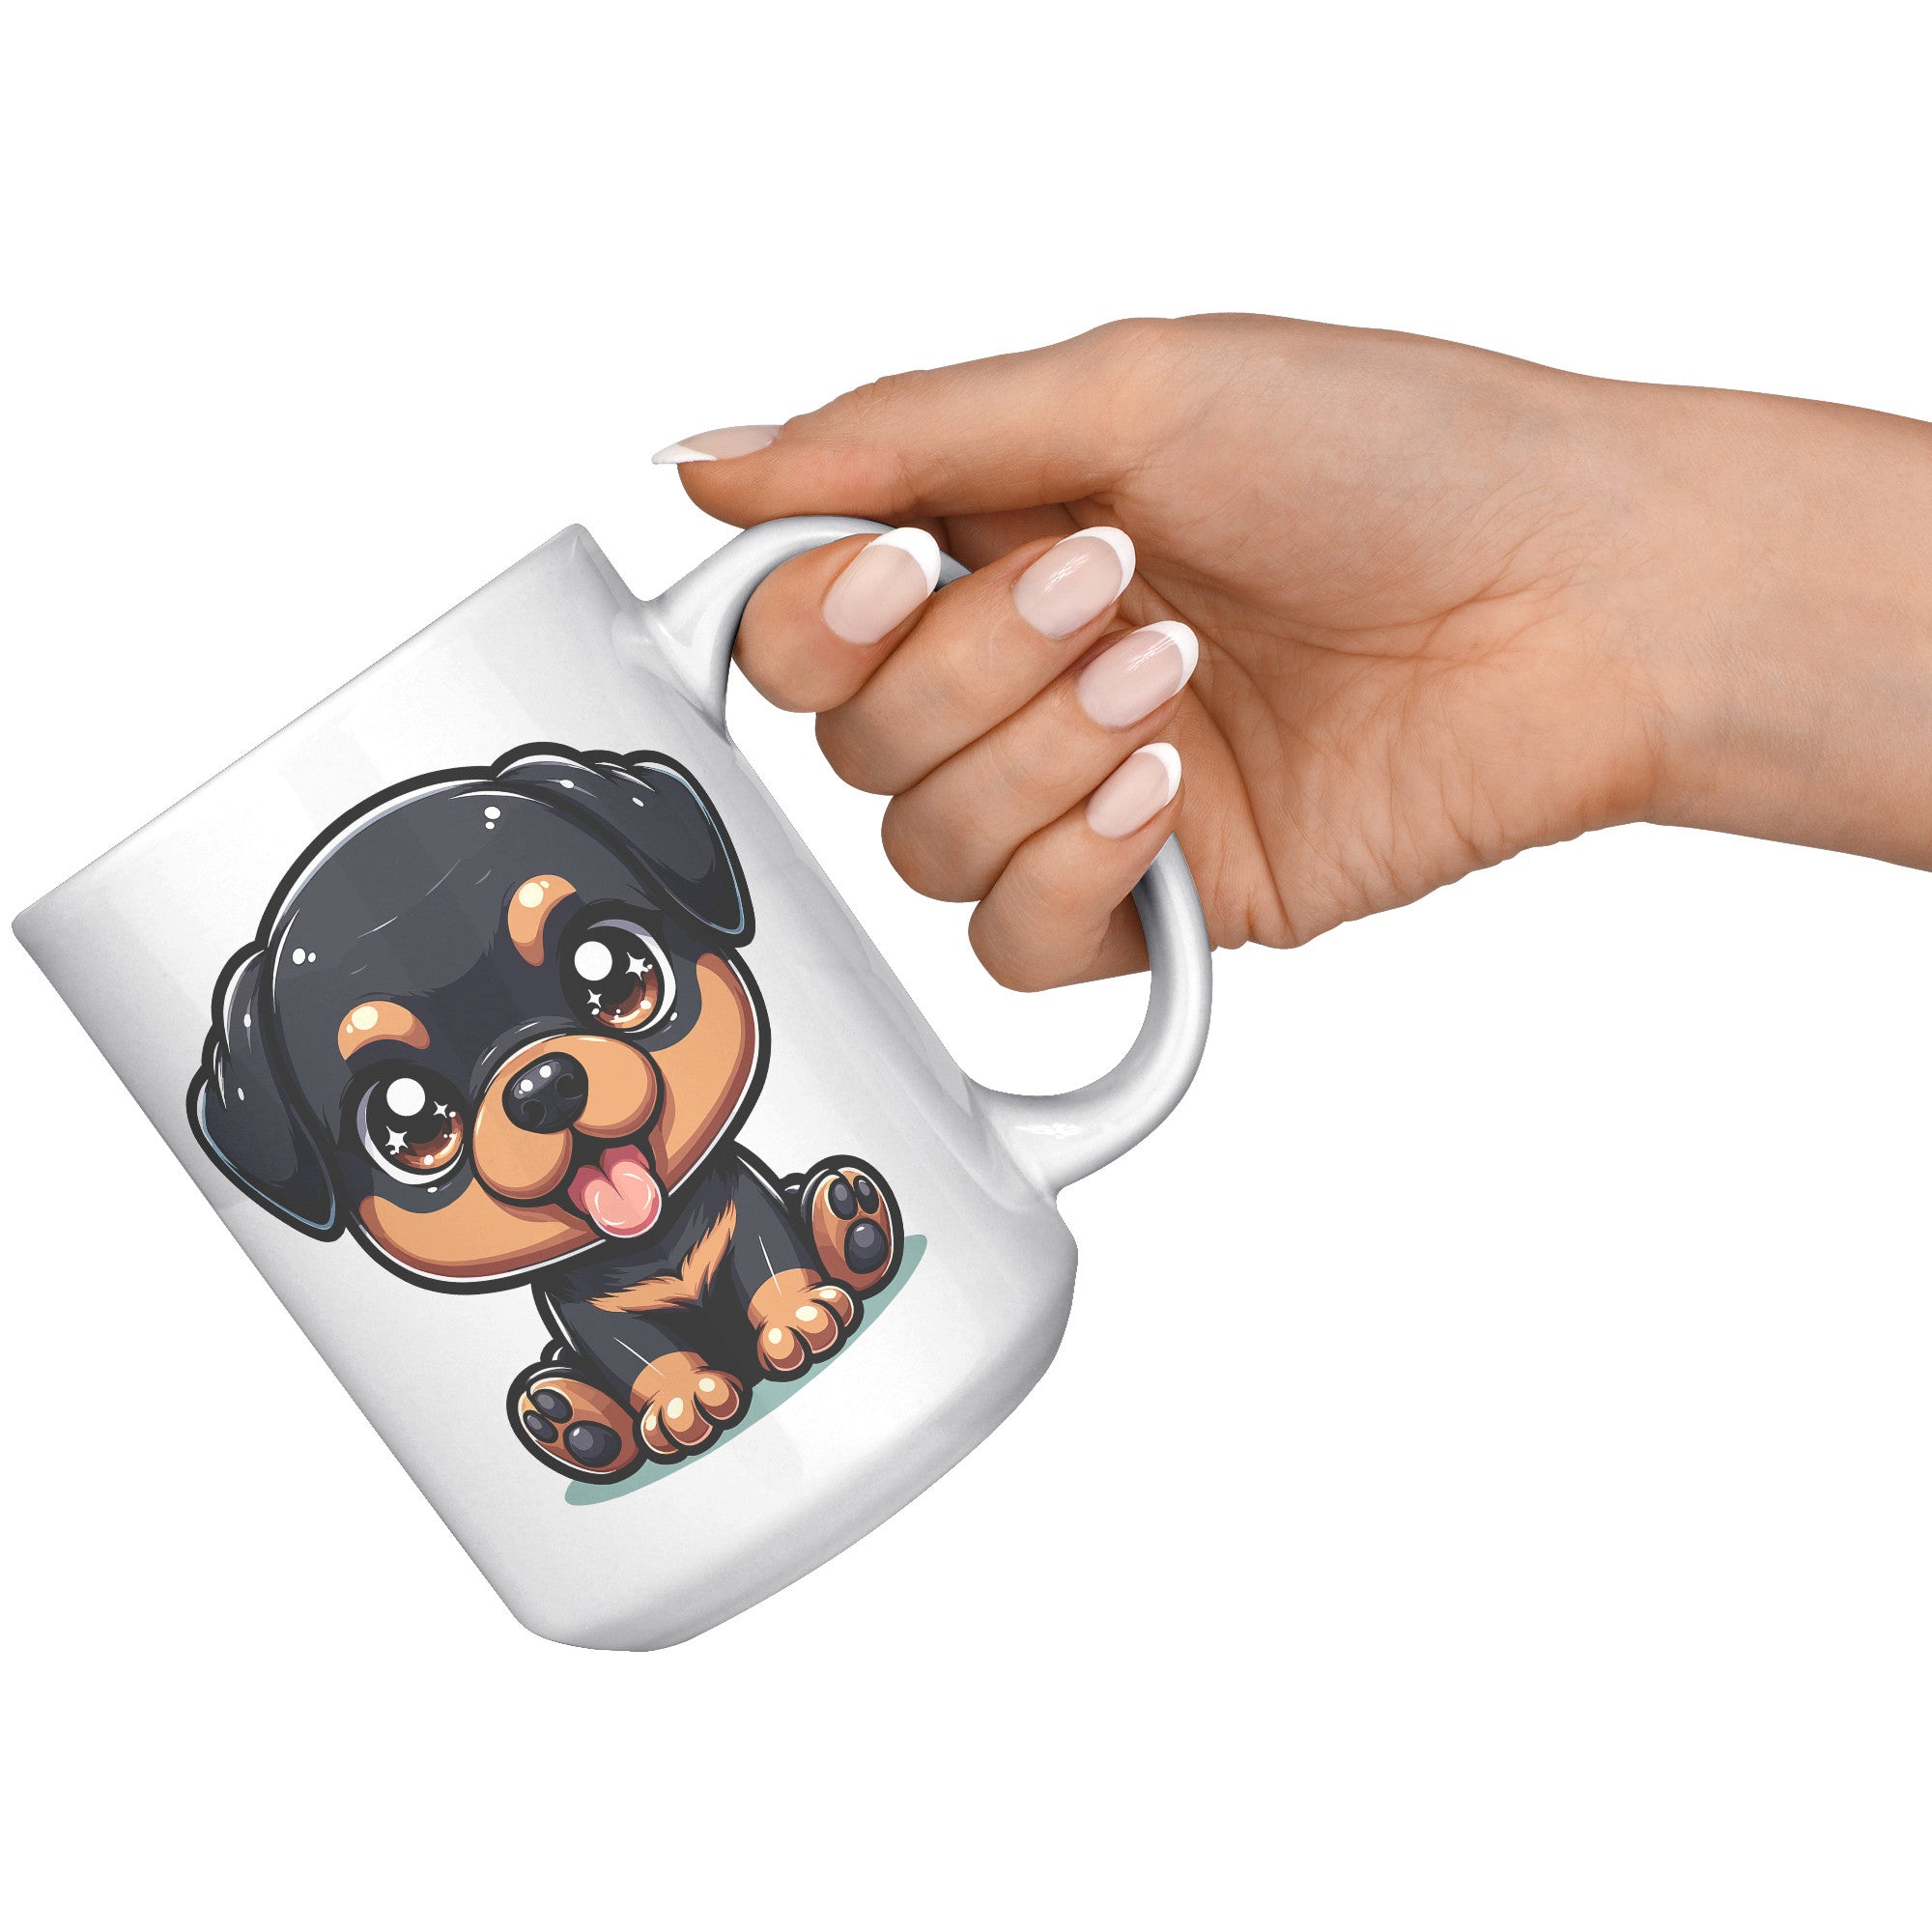 15oz Rottweiler Cartoon Coffee Mug - Bold Rottie Lover Coffee Mug - Perfect Gift for Rottweiler Owners - Strong and Loyal Dog Coffee Mug" - B1